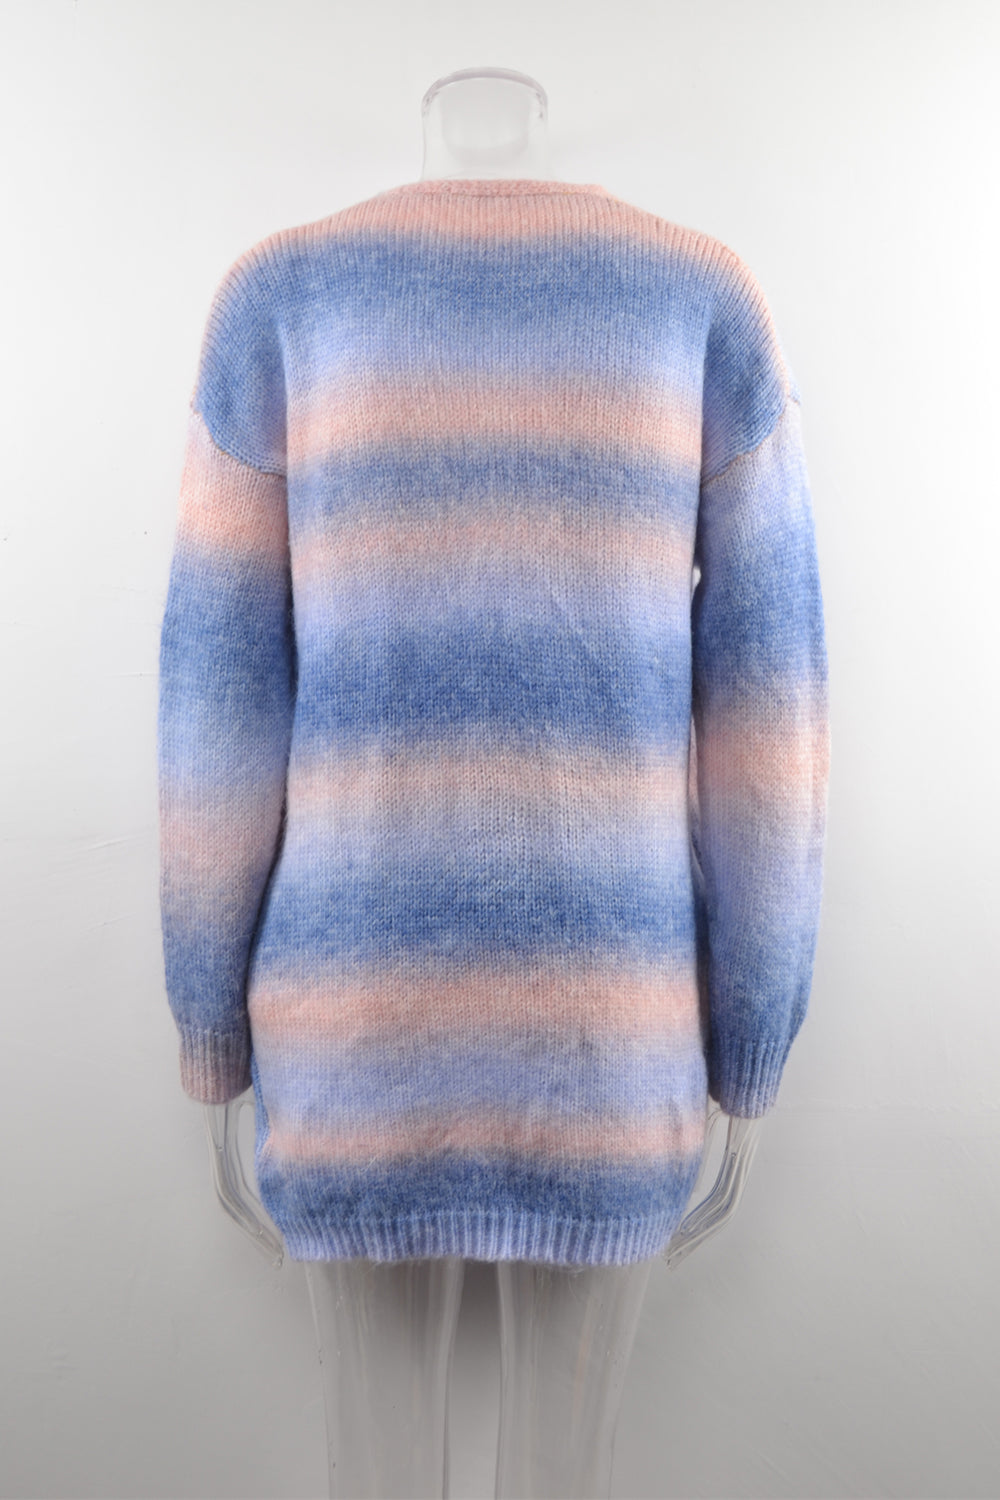 BamBam Winter Sweater Rainbow Tie Dye Plus Size Cardigan Women's Knitting Shirt Jacket - BamBam